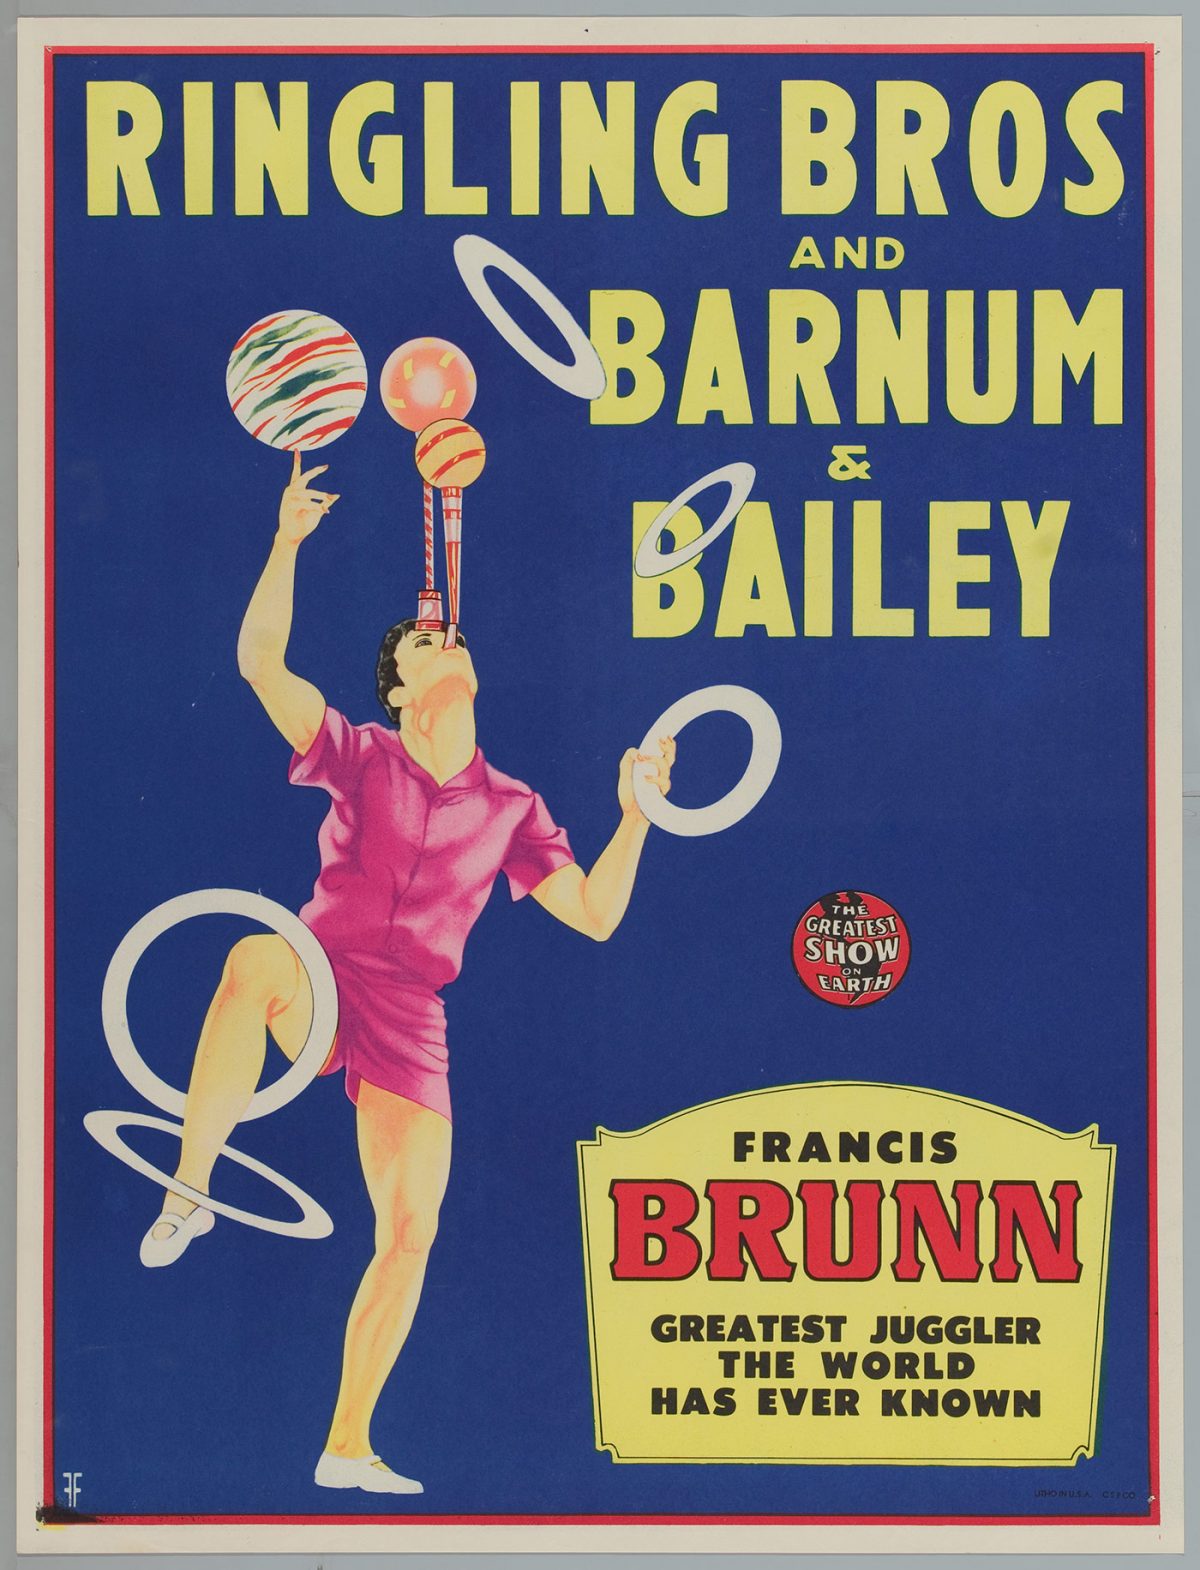 Francis Brunn juggling